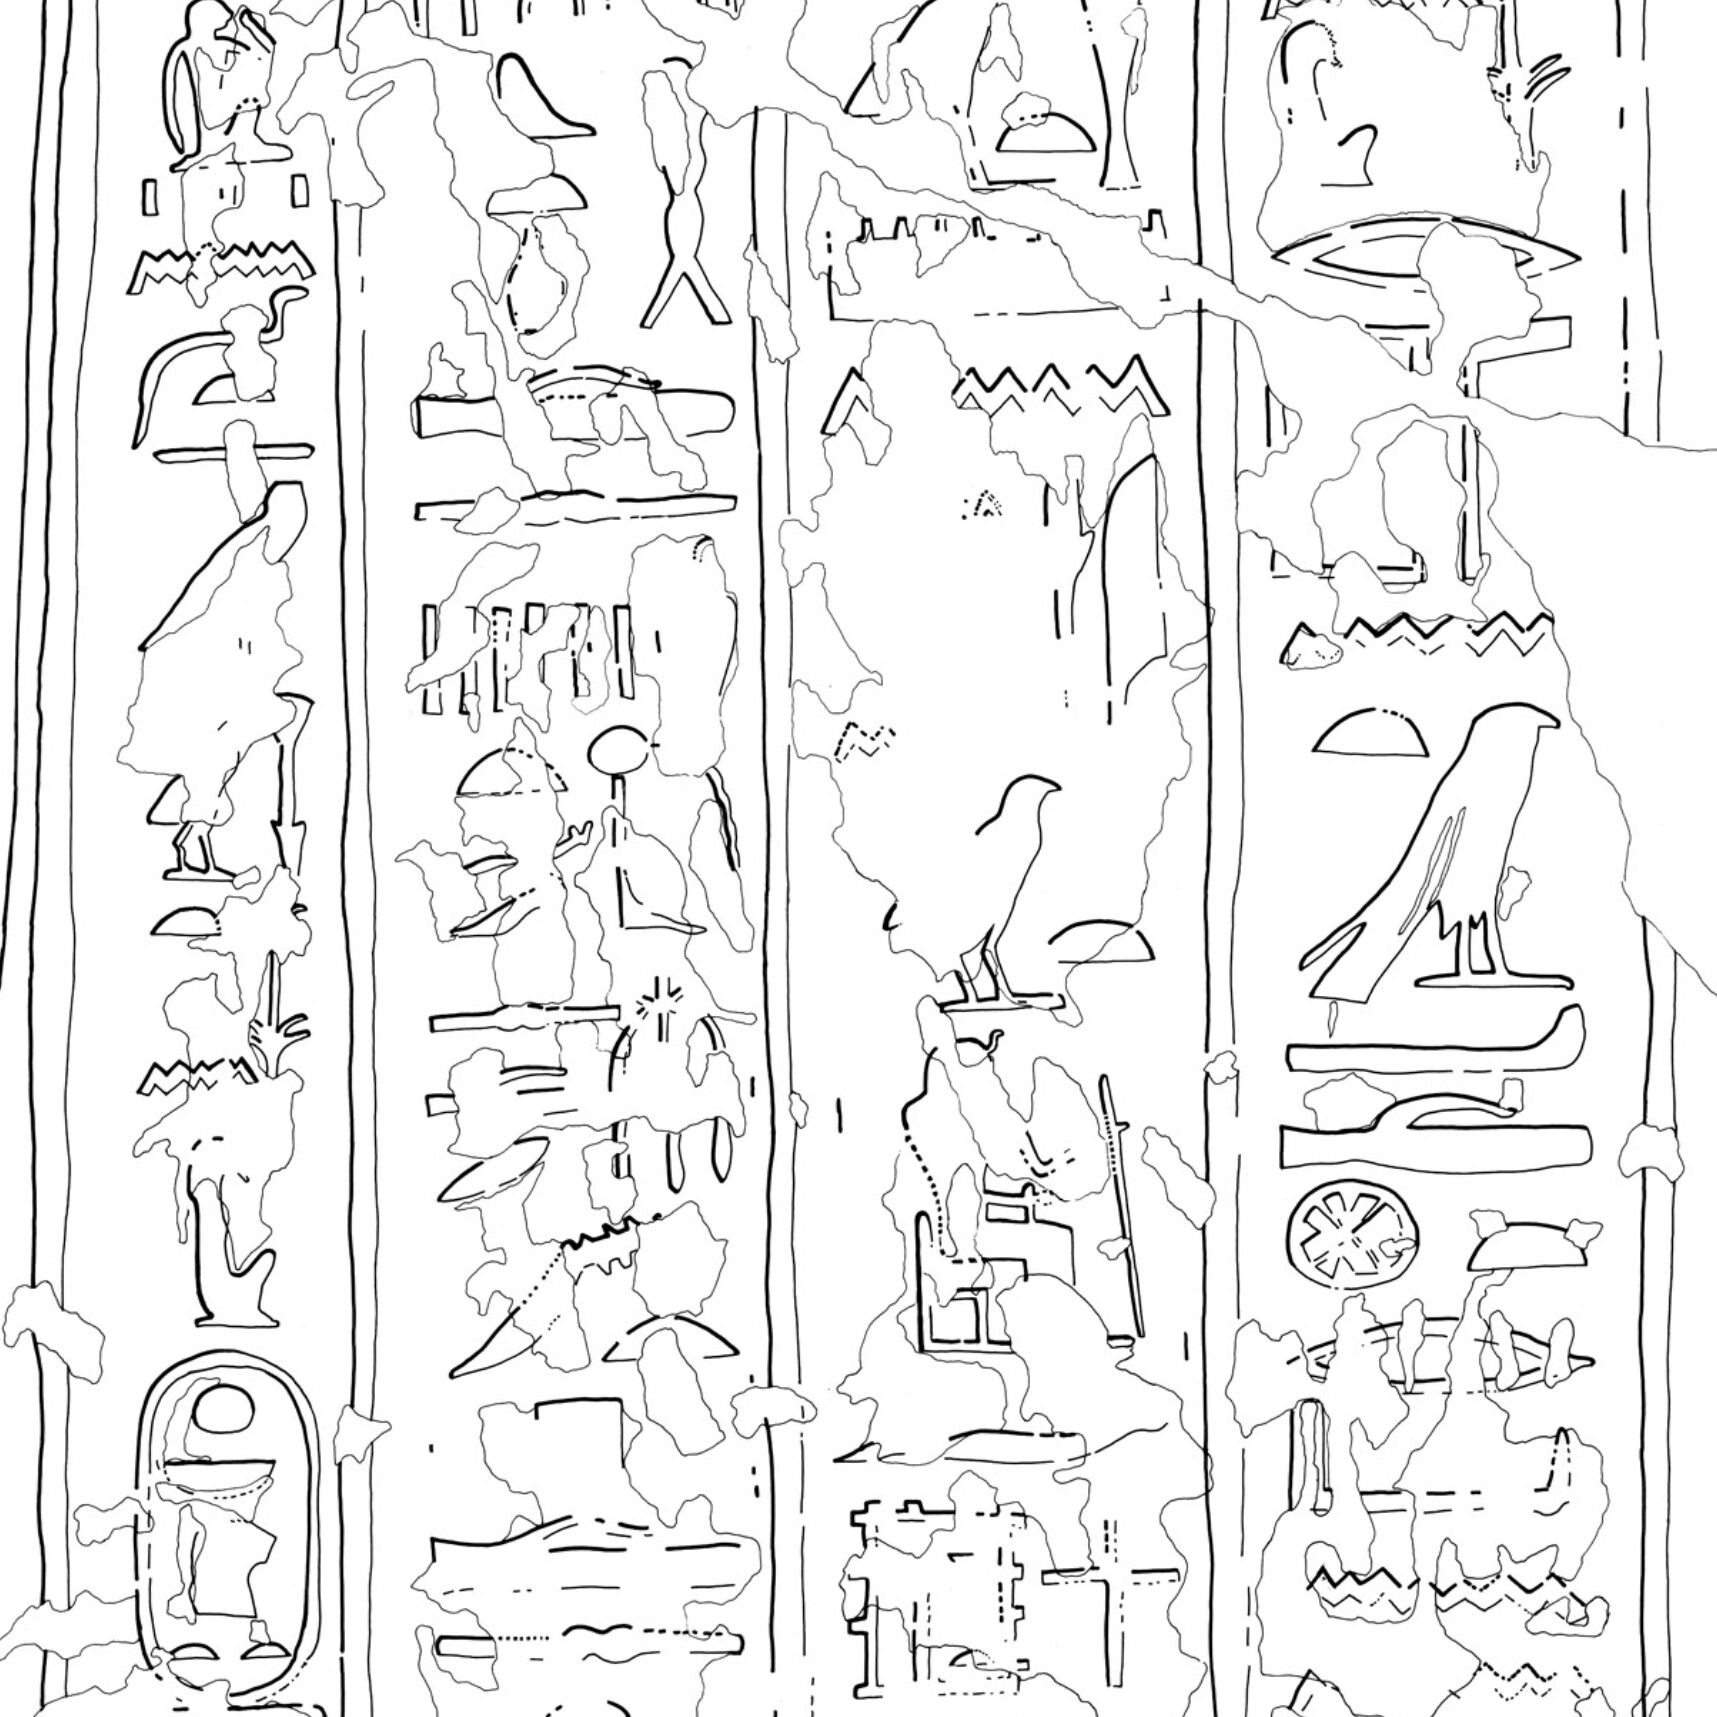 Hagr Edfu, Tomb of Sataimau, Niche façade inscription